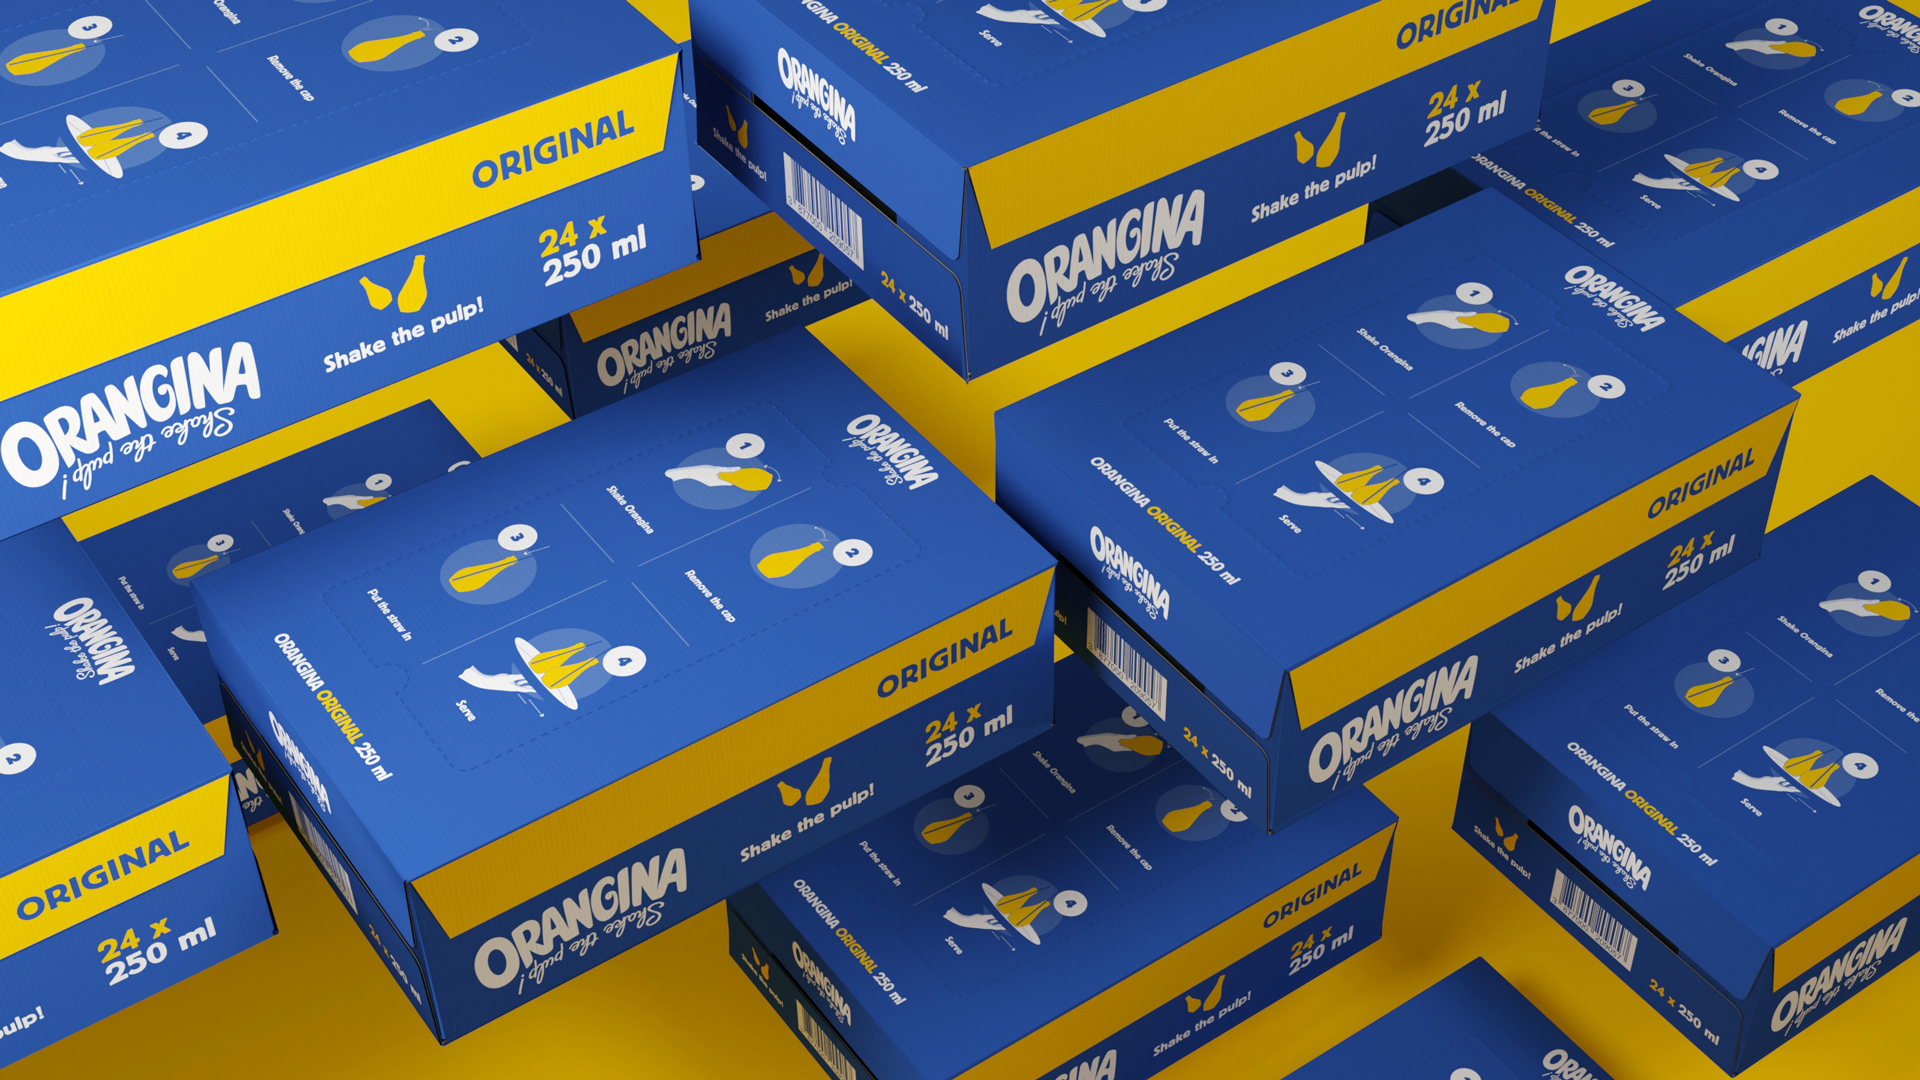 Orangina-Transport-Packaging-by-Emtisquare-8